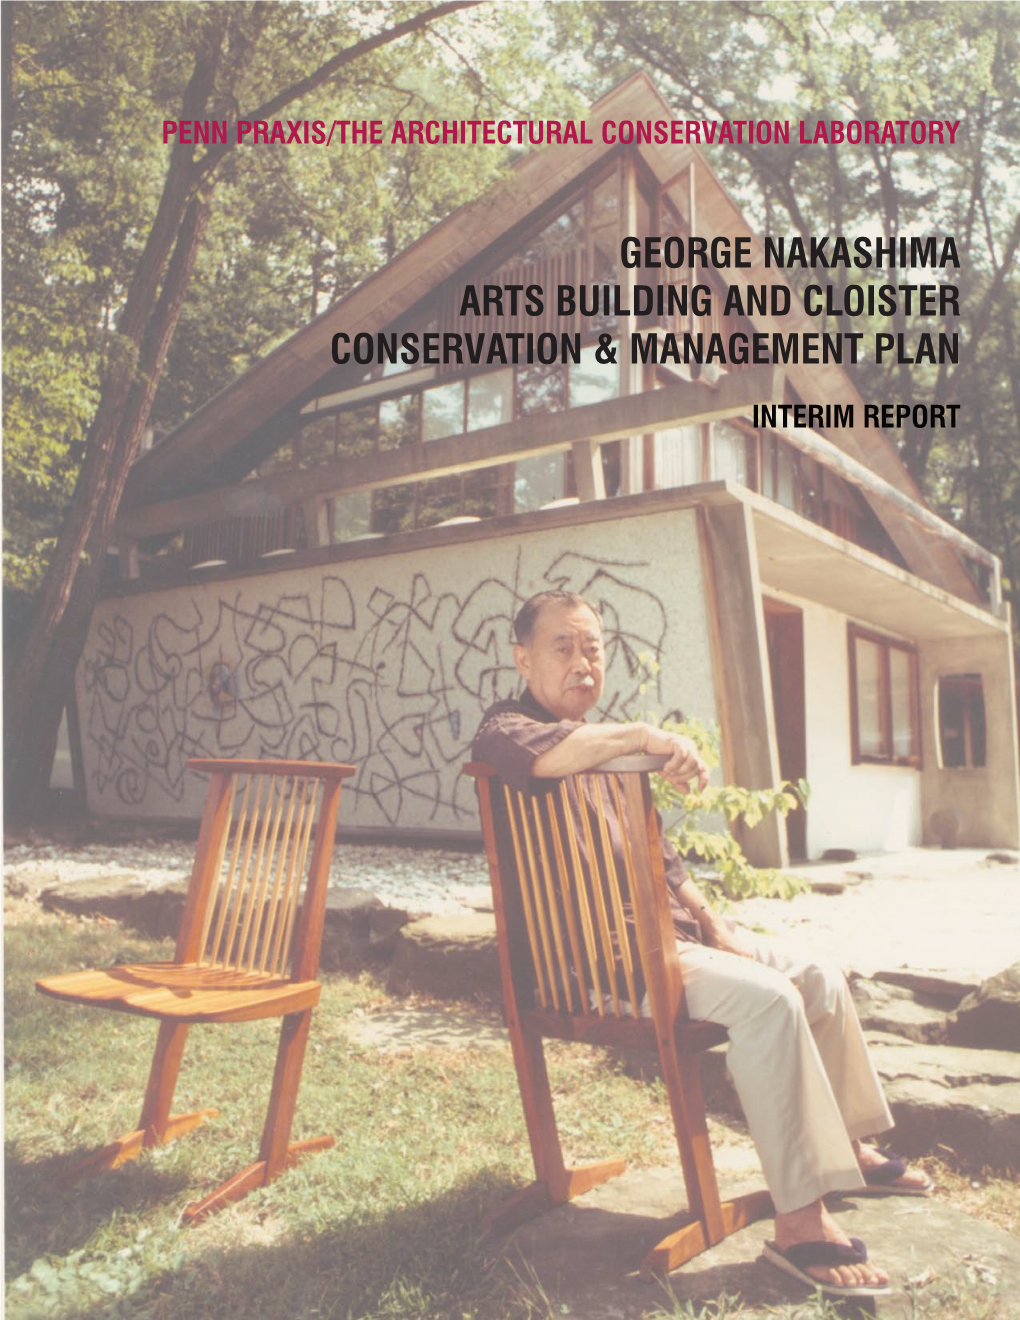 George Nakashima Arts Building and Cloister Conservation & Management Plan